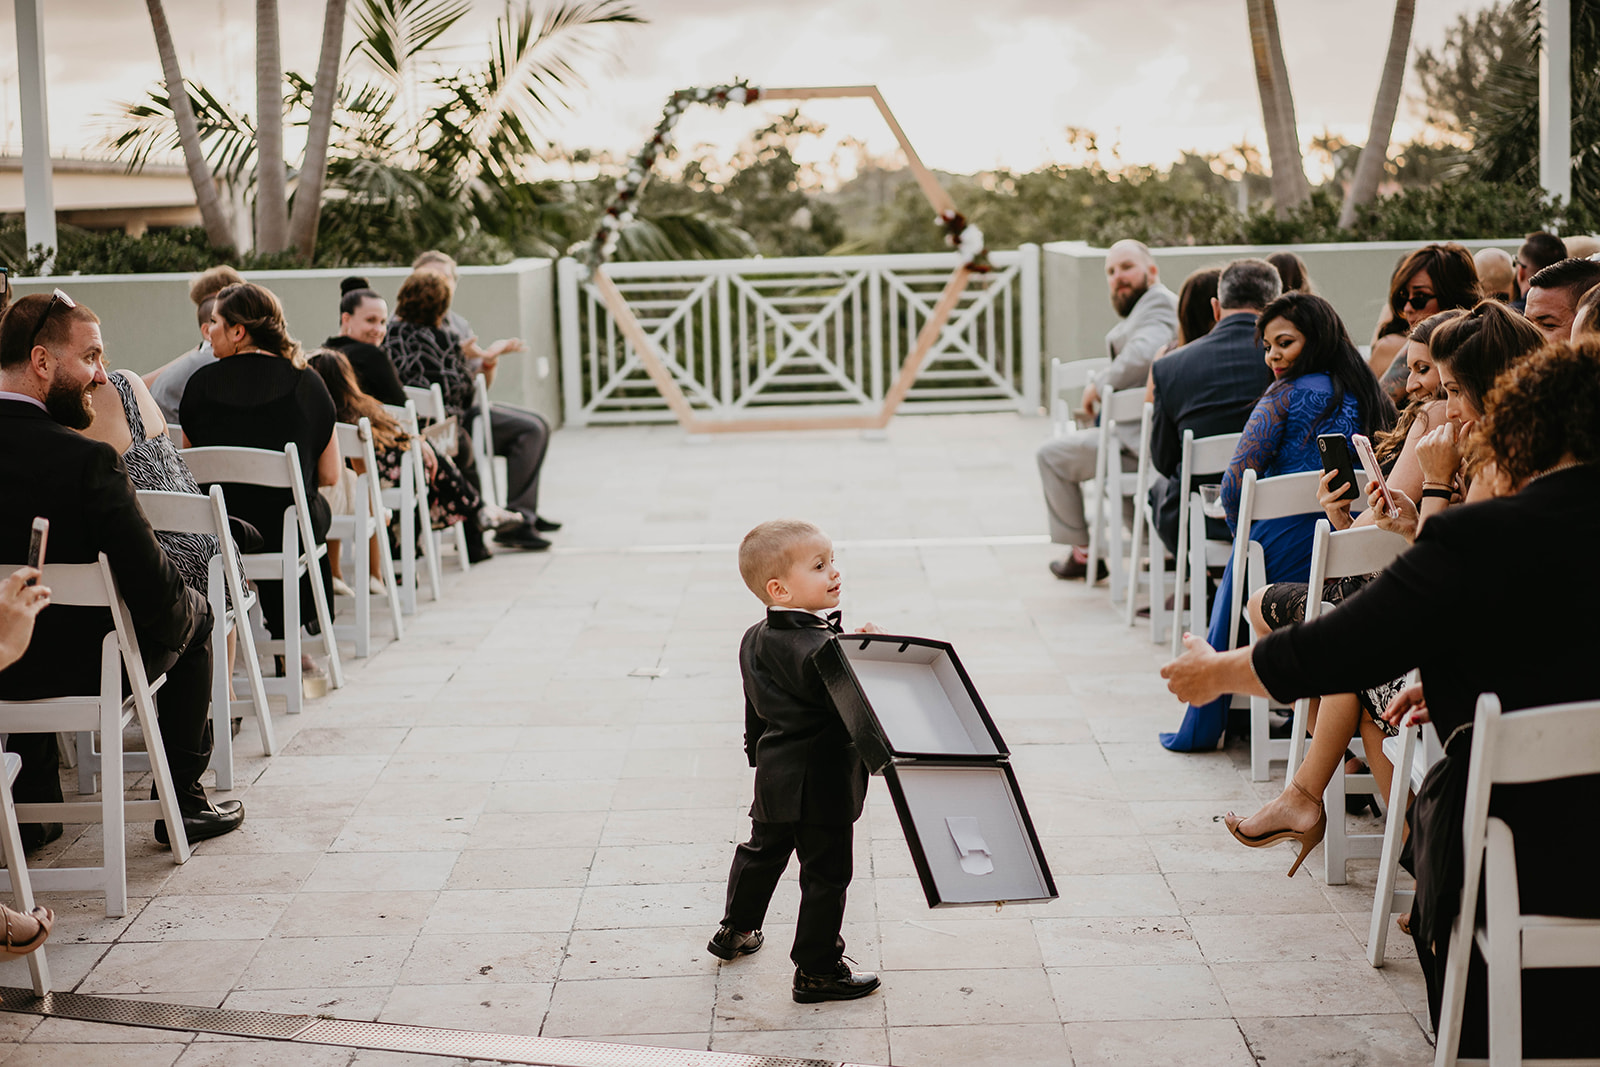 South Florida Greenery Wedding Ceremony Photography